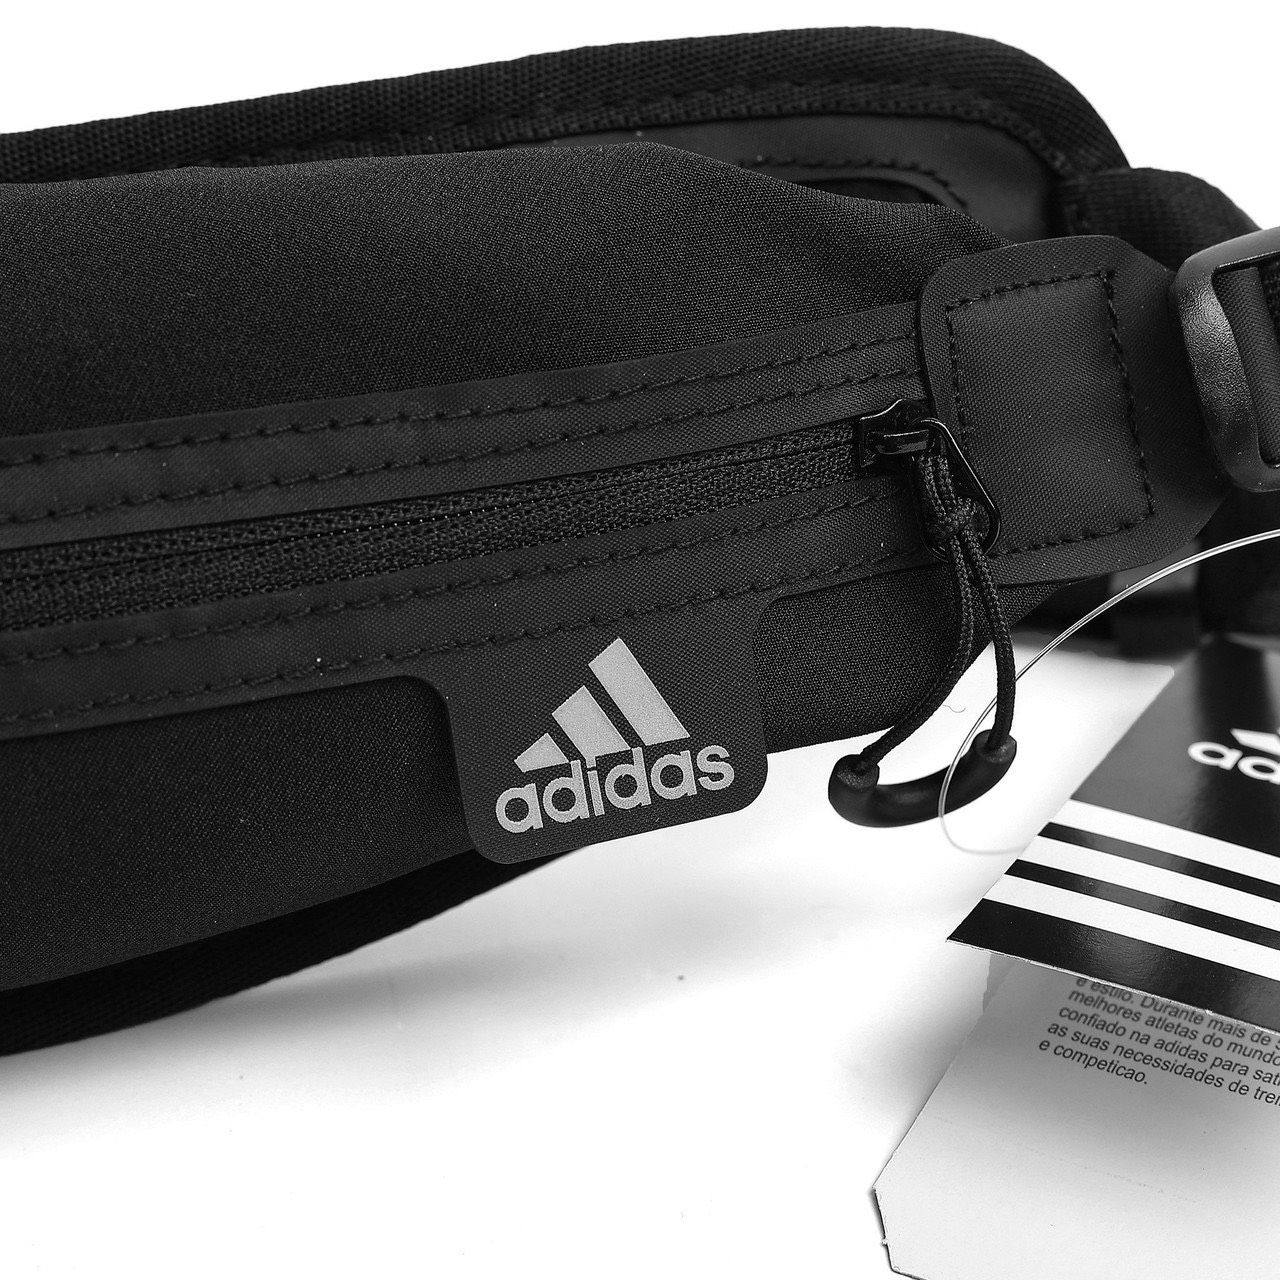  Adidas Running Gear Waist Bag HI3486 